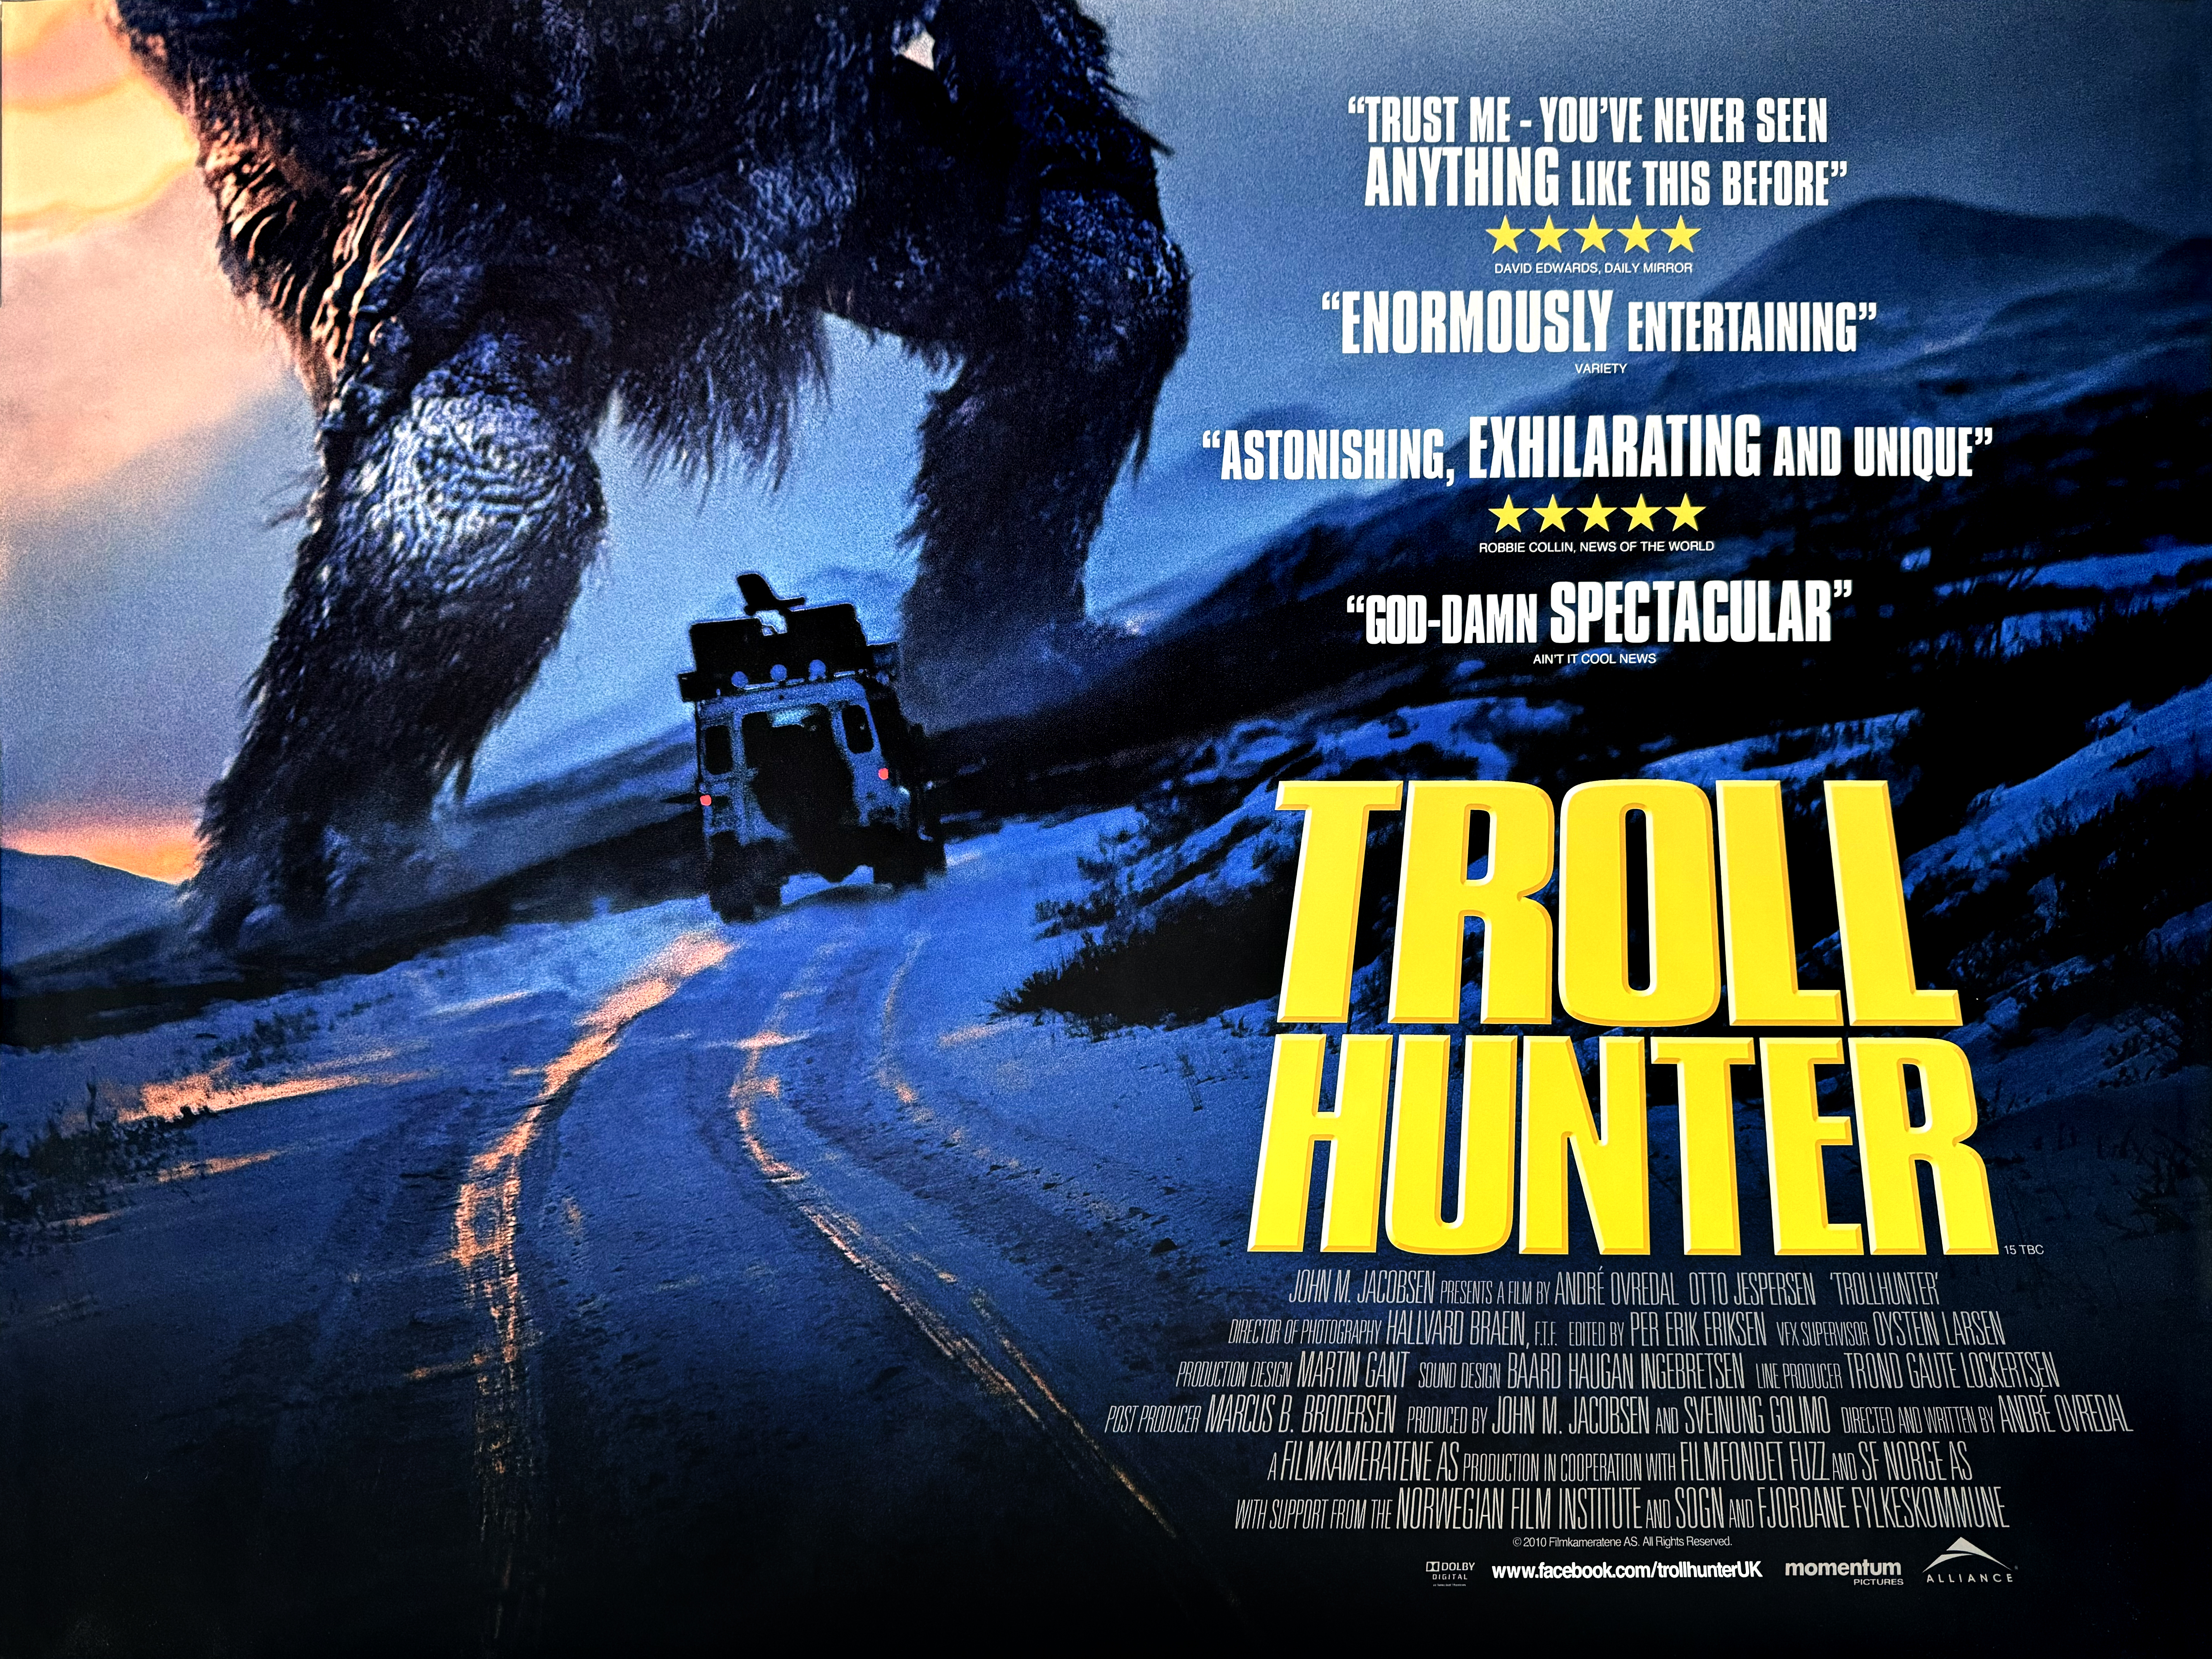 Troll Hunter movie quad poster